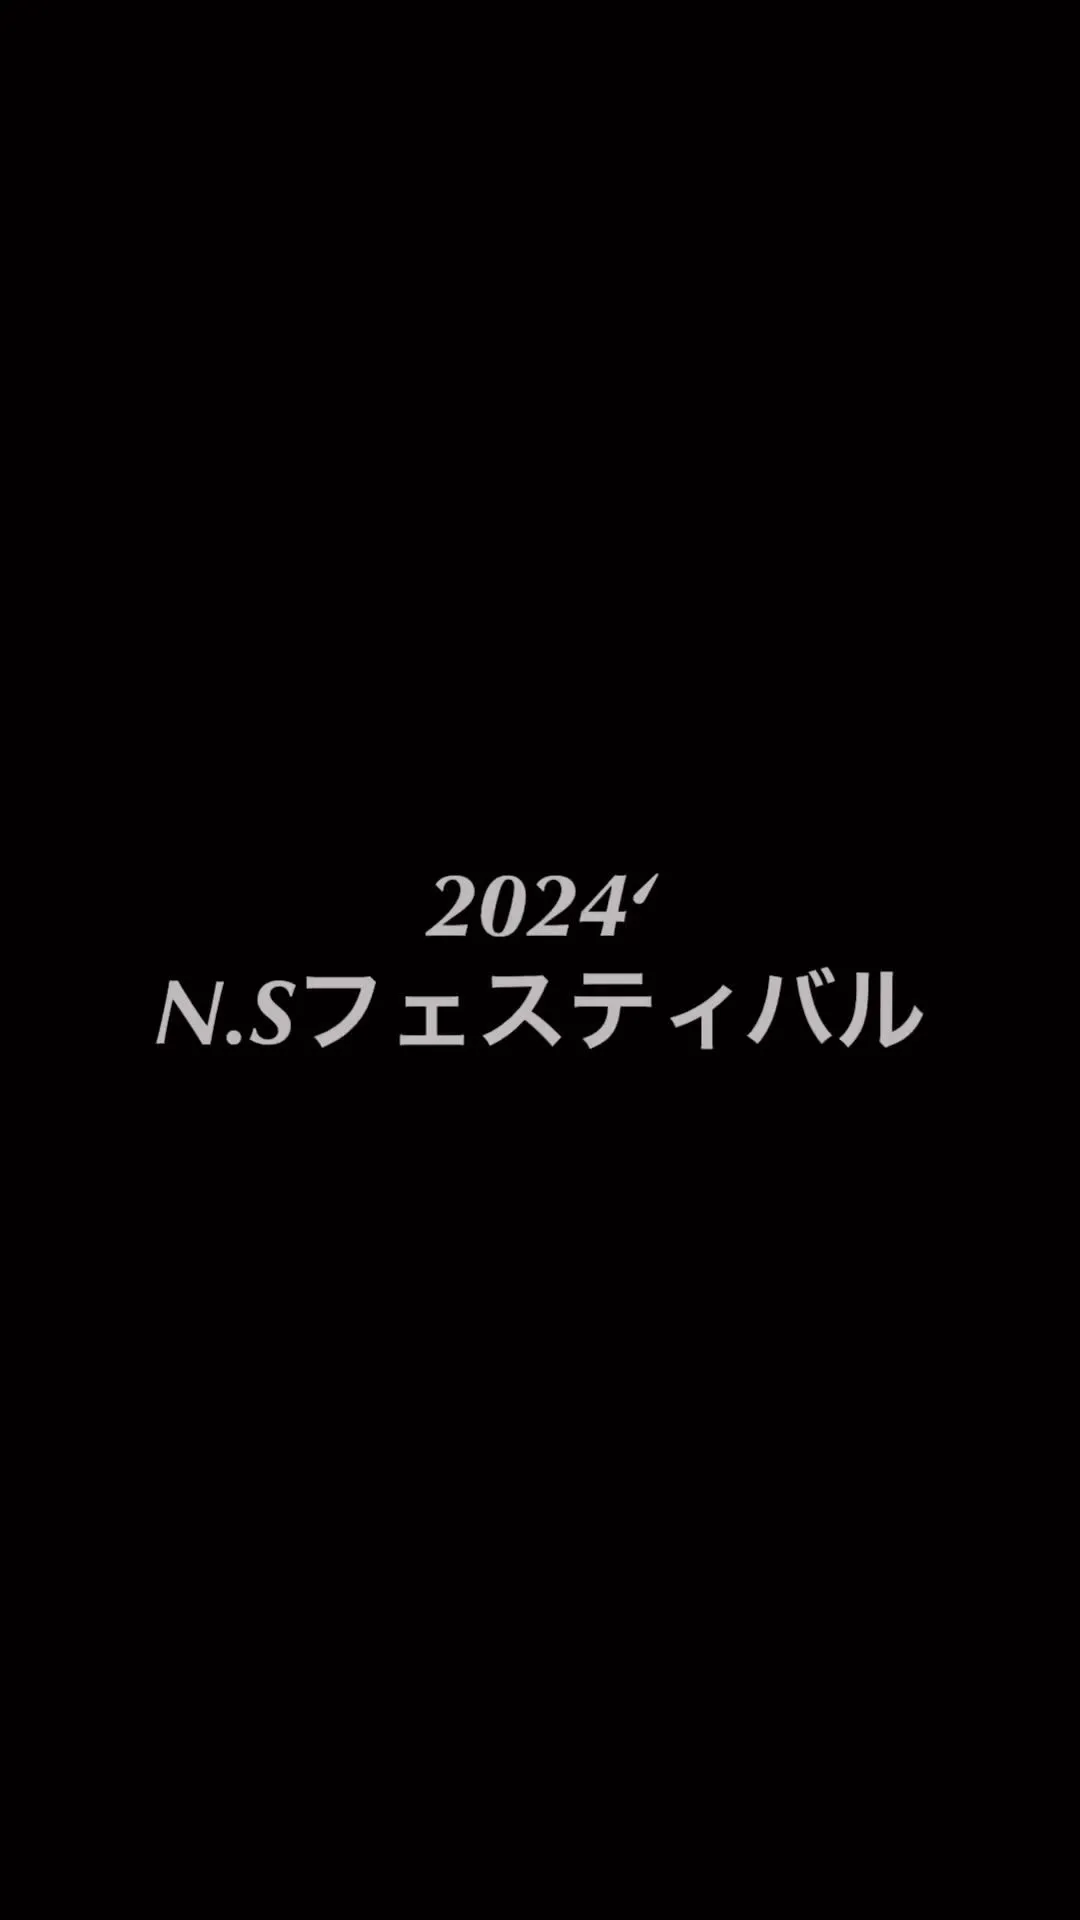 2024’N.Sフェスティバル